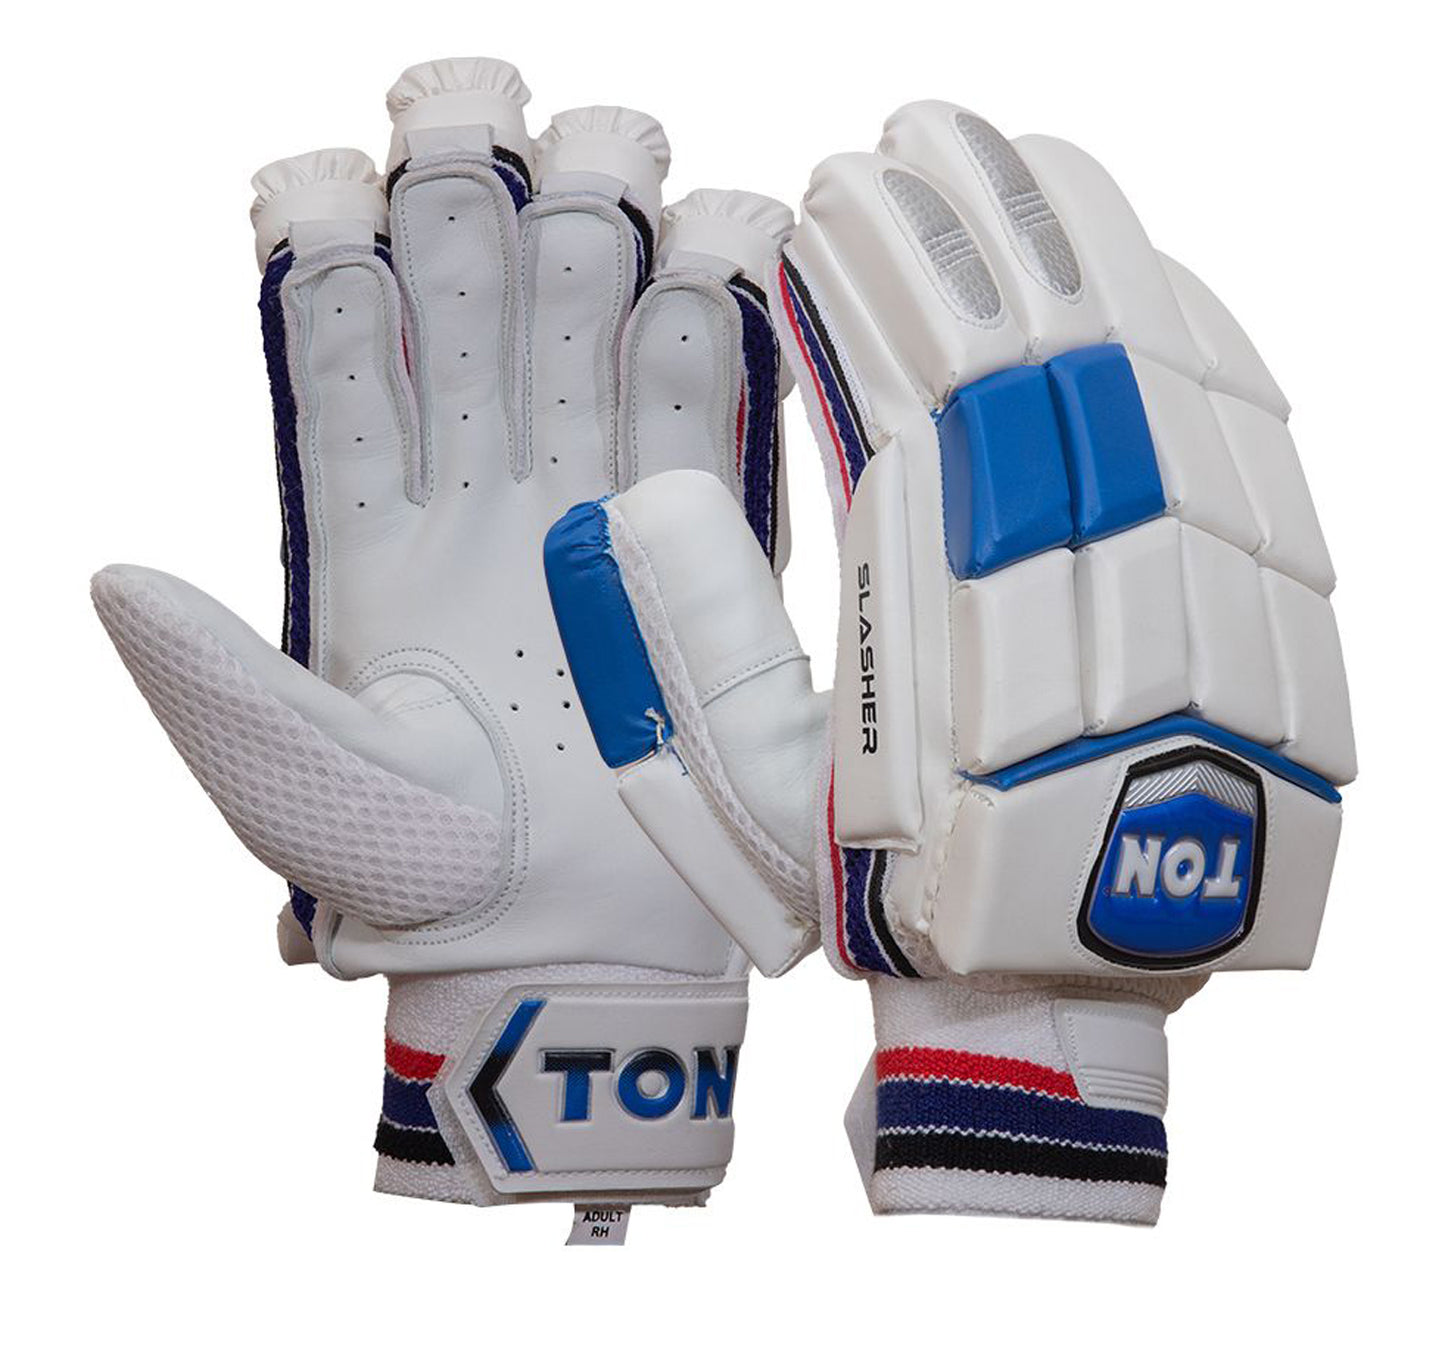 SS Ton Slasher RH Cricket Batting Gloves - Best Price online Prokicksports.com